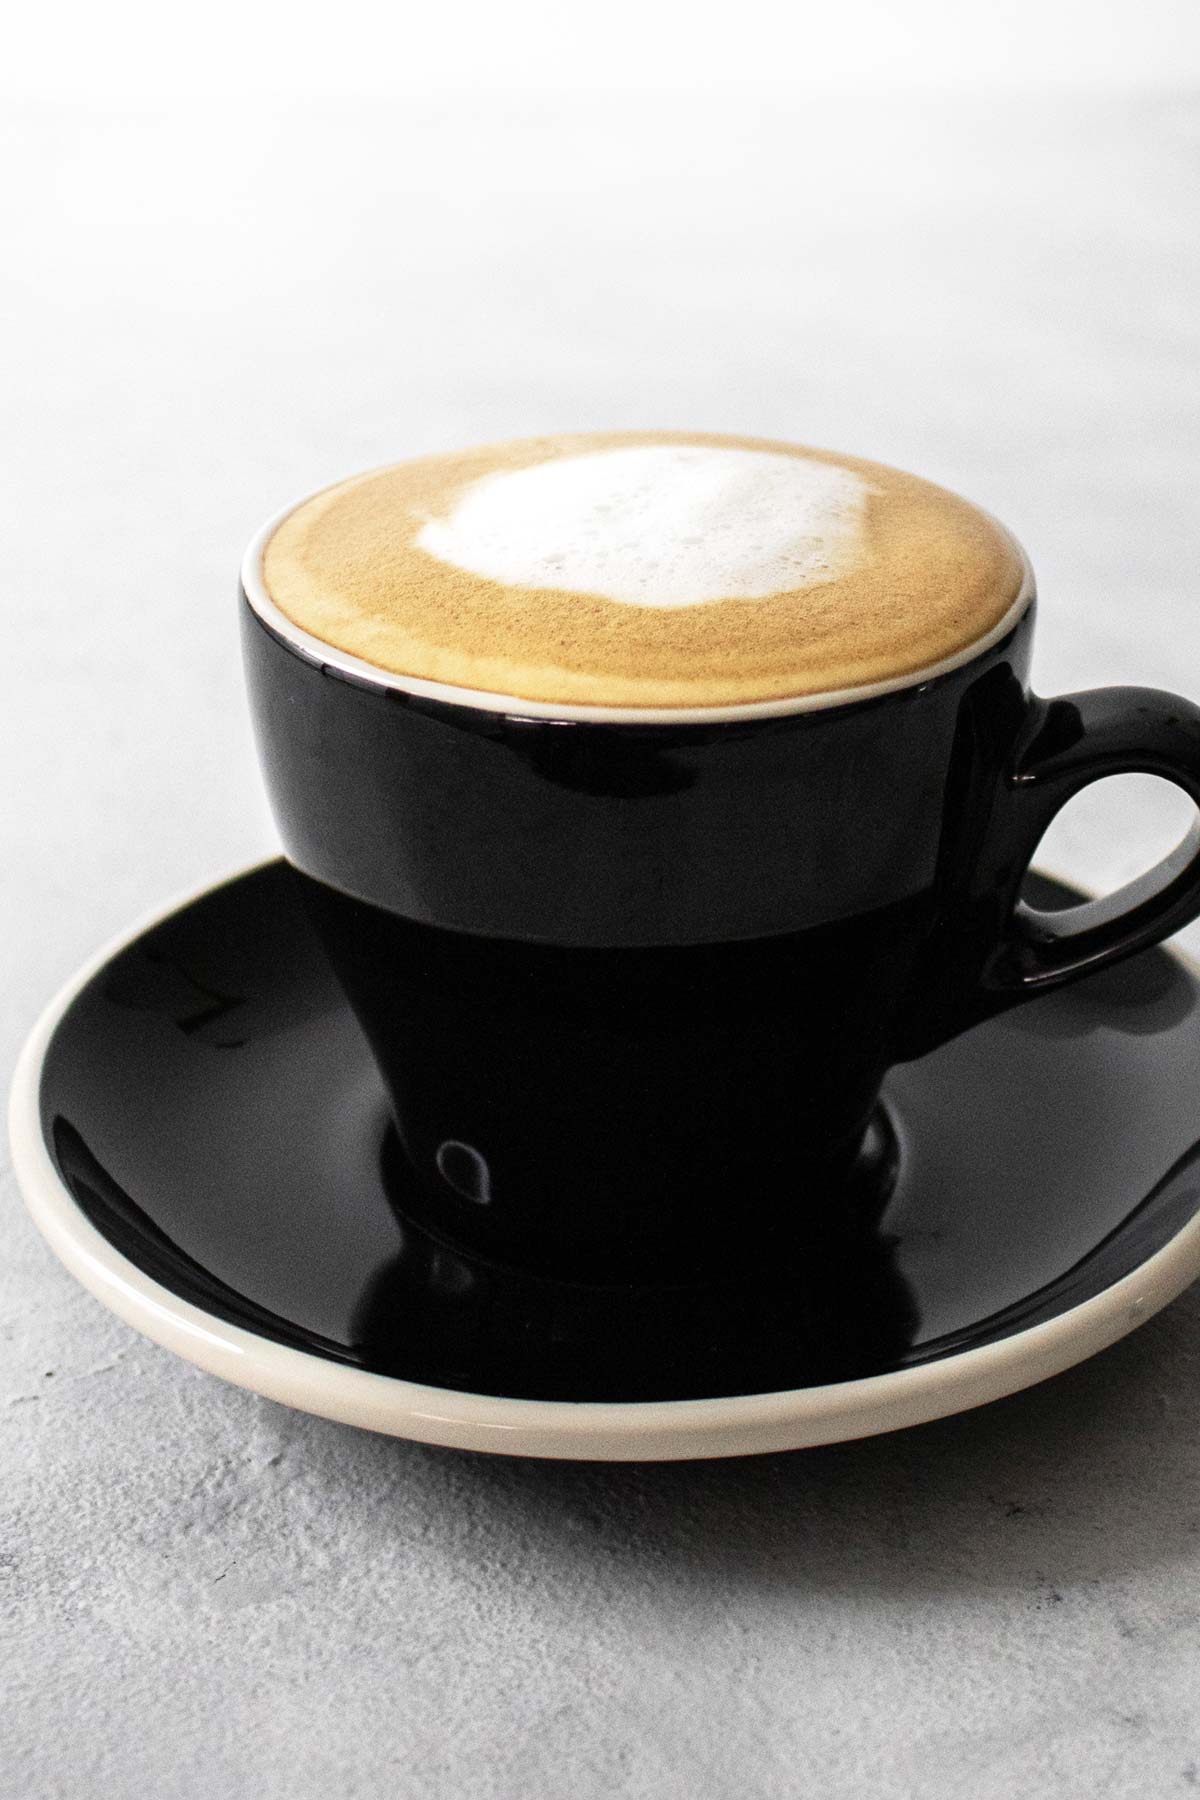 Cappuccino in a black mug.